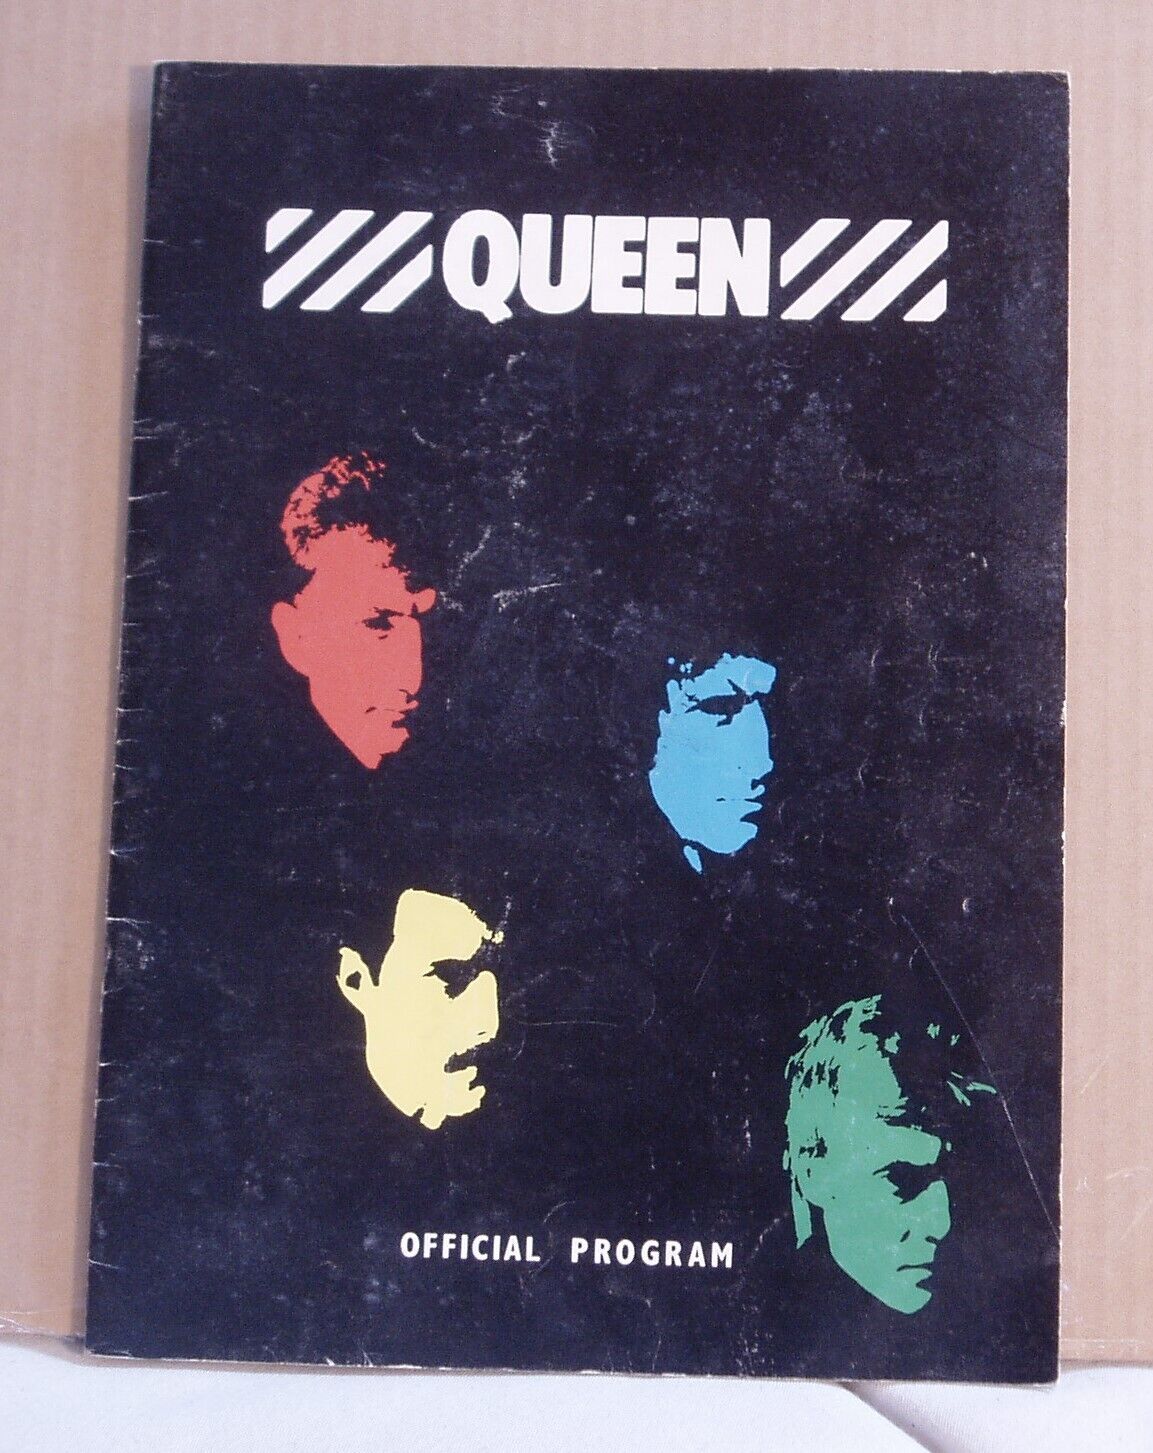 Queen Freddie Mercury "Hot Space" Program Last US Tour 1982